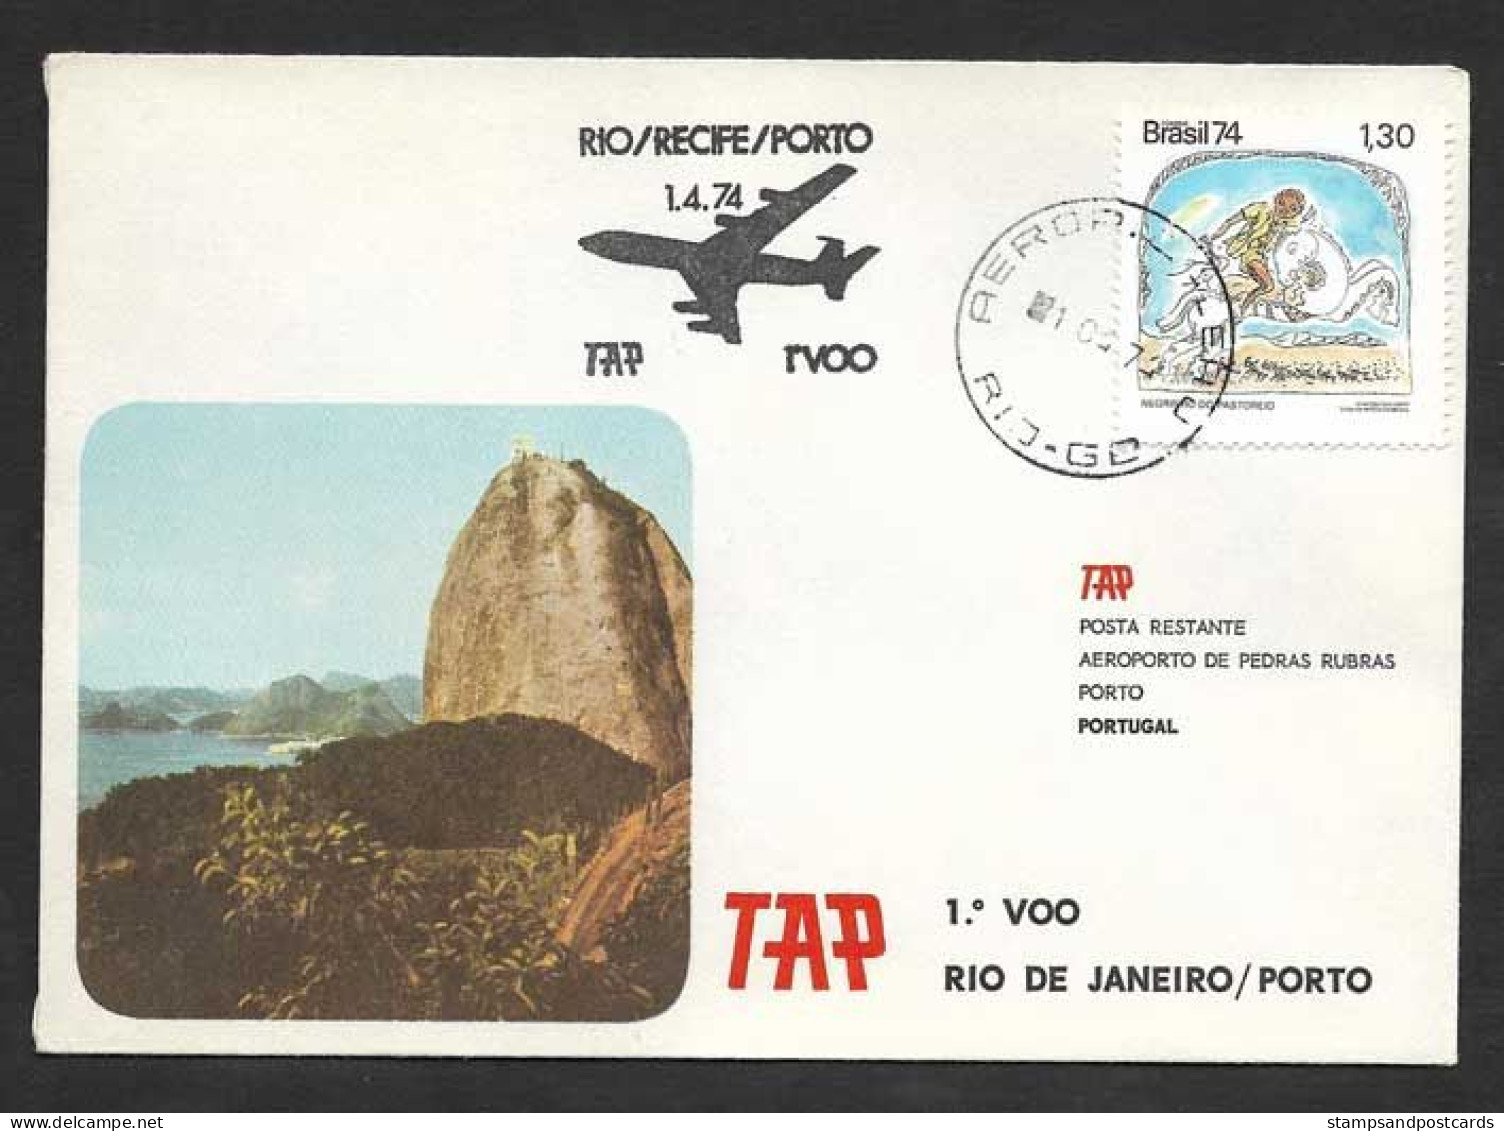 Brèsil Brasil Brazil Portugal Premier Vol TAP Rio Porto 1974 First Flight Rio De Janeiro Oporto - Luftpost